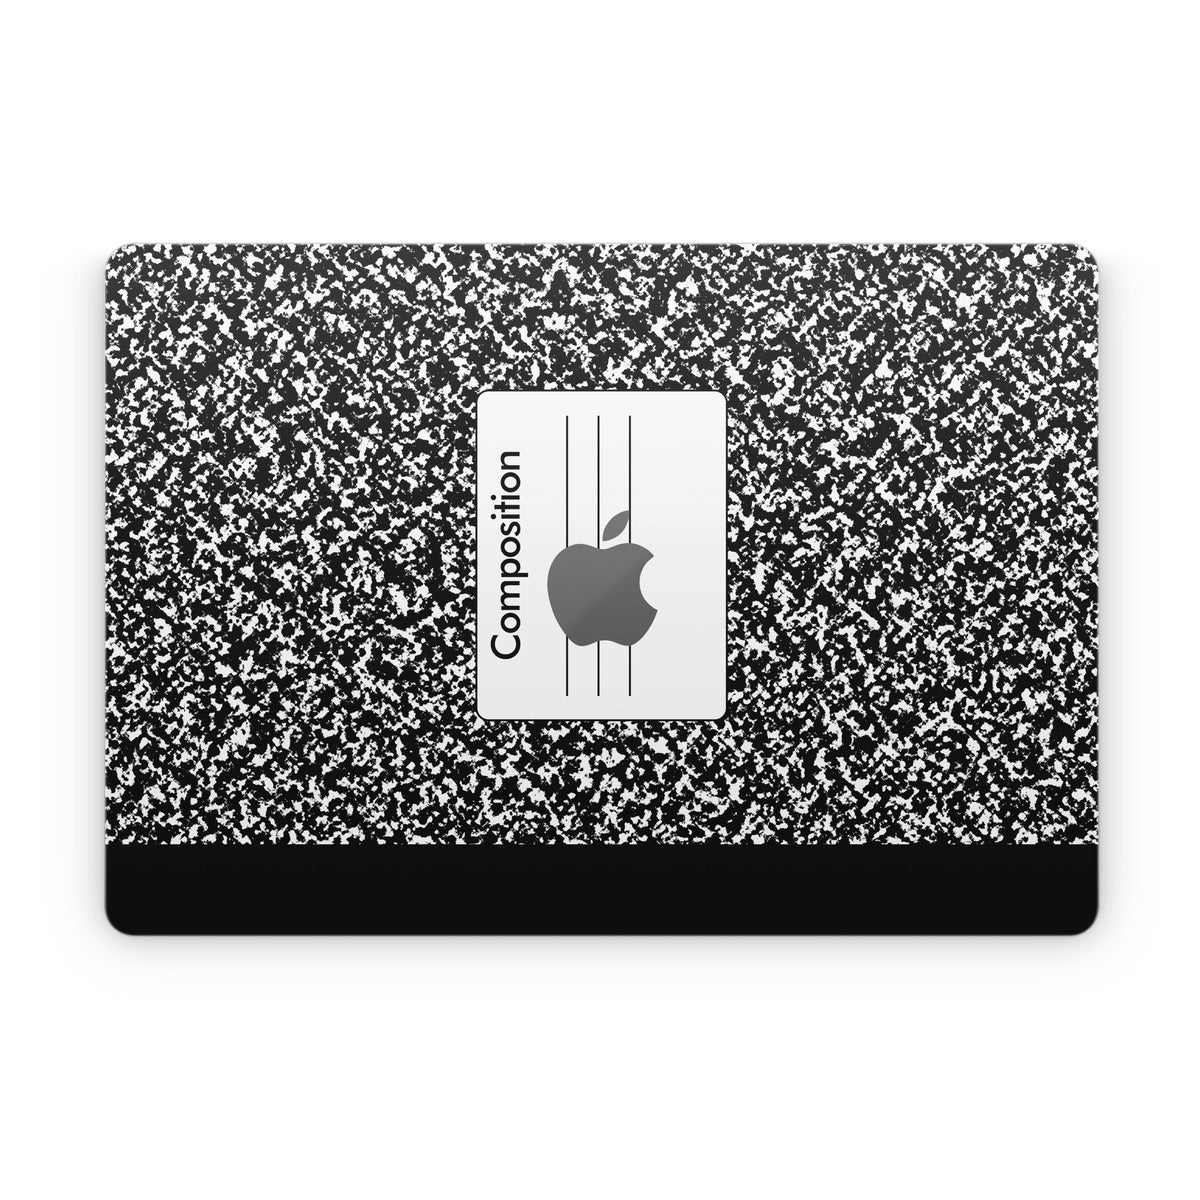 Composition Notebook - Apple MacBook Skin